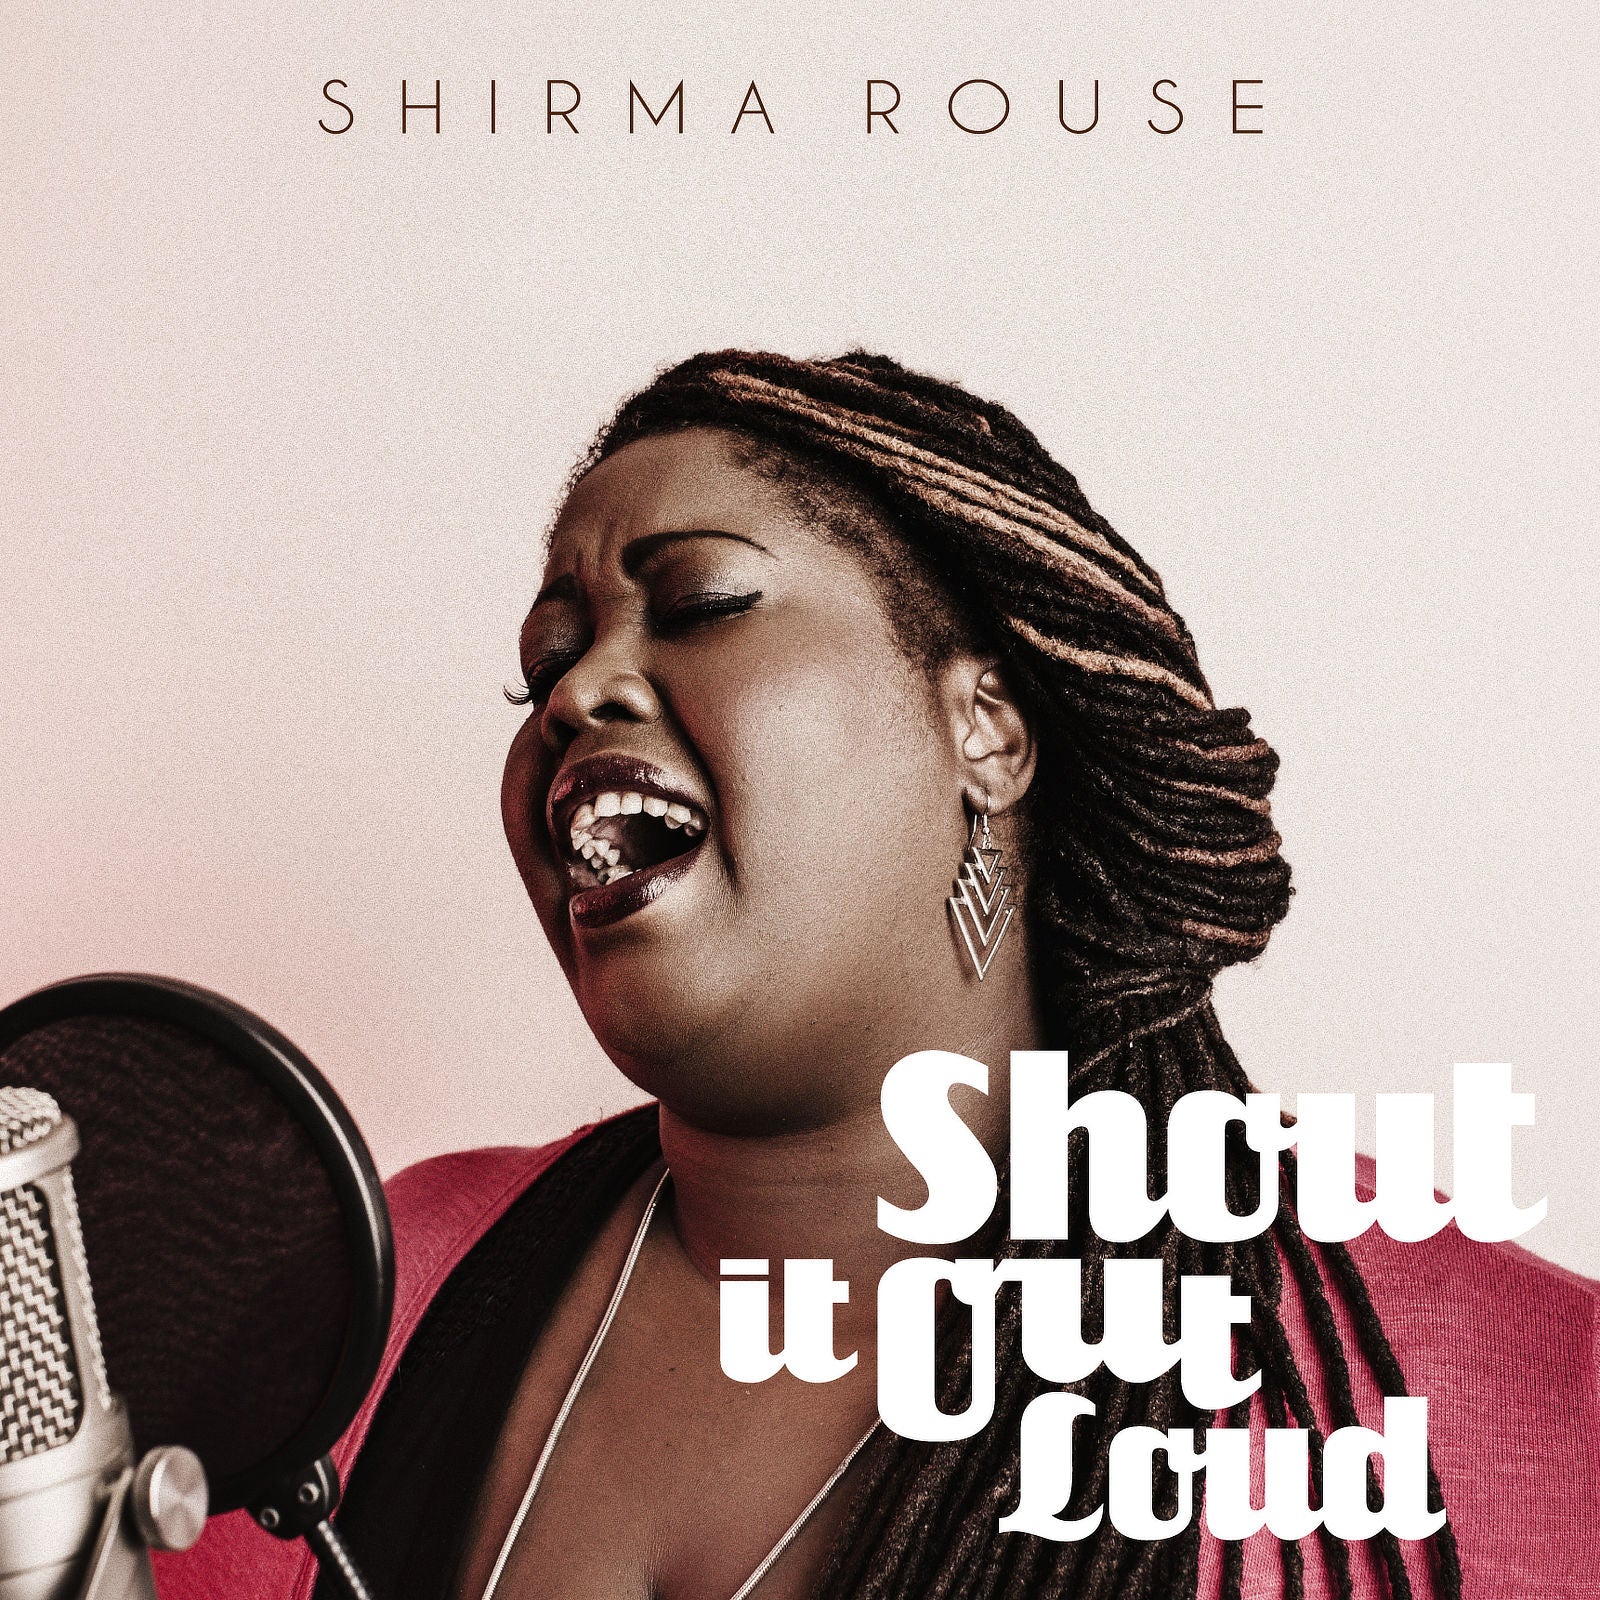 Shirma Rouse / Shout it OUt Loud